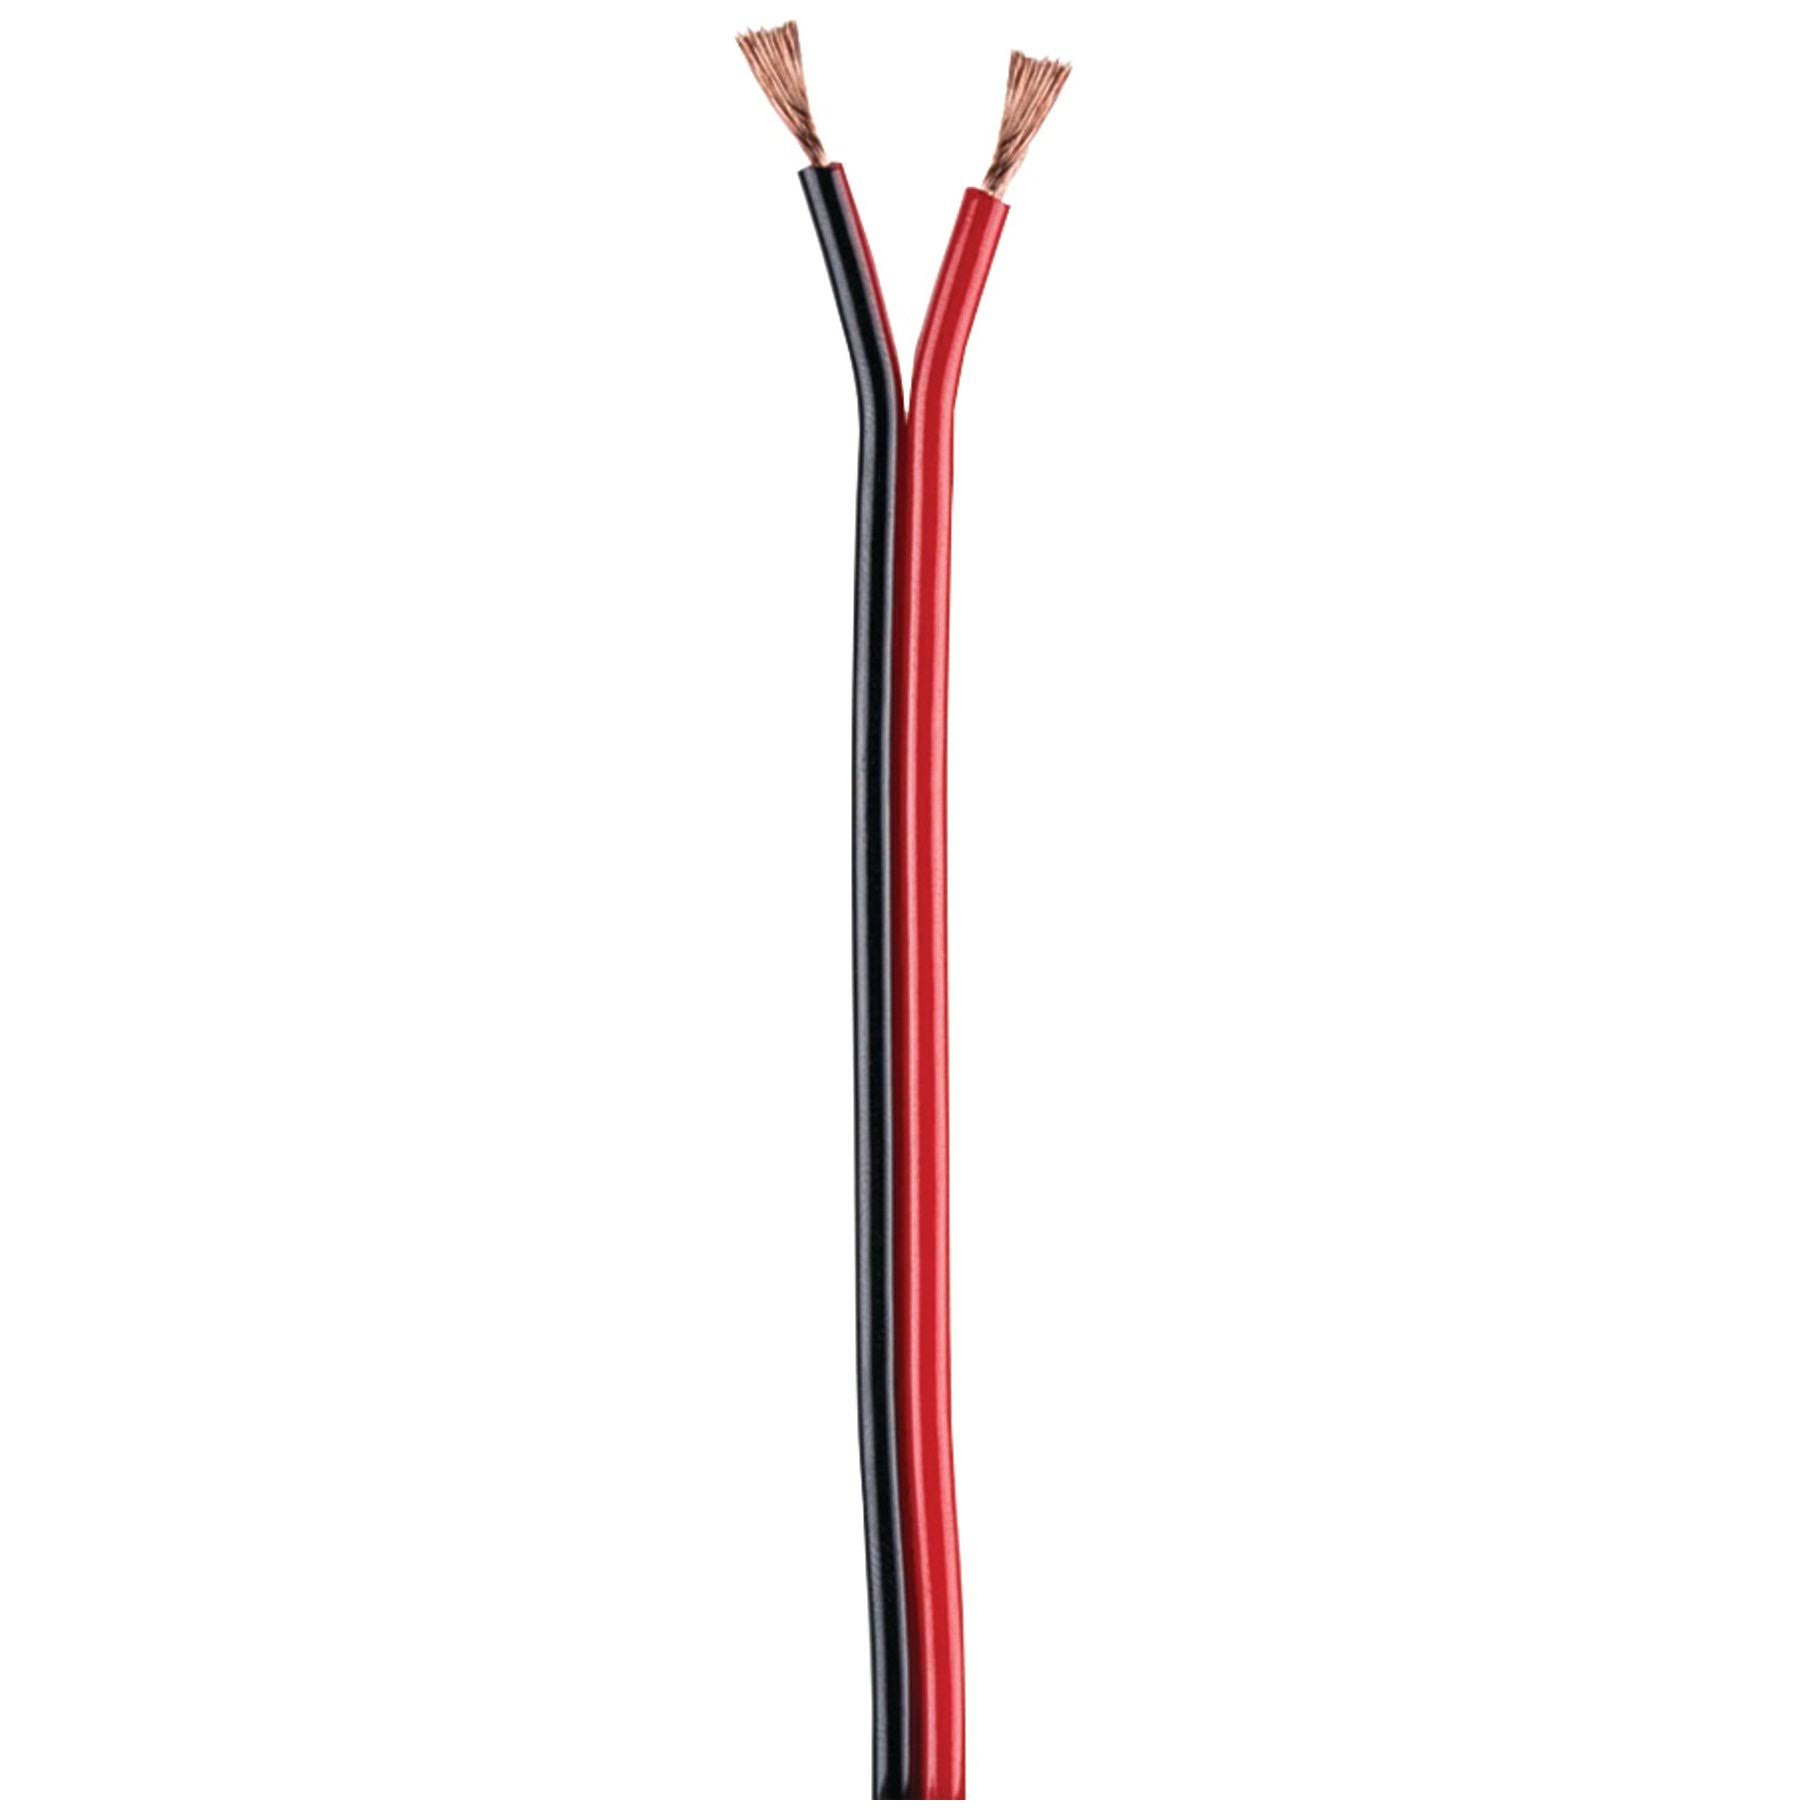 Install Bay Speaker Wires - Red/Black, 18 Gauge, 500'